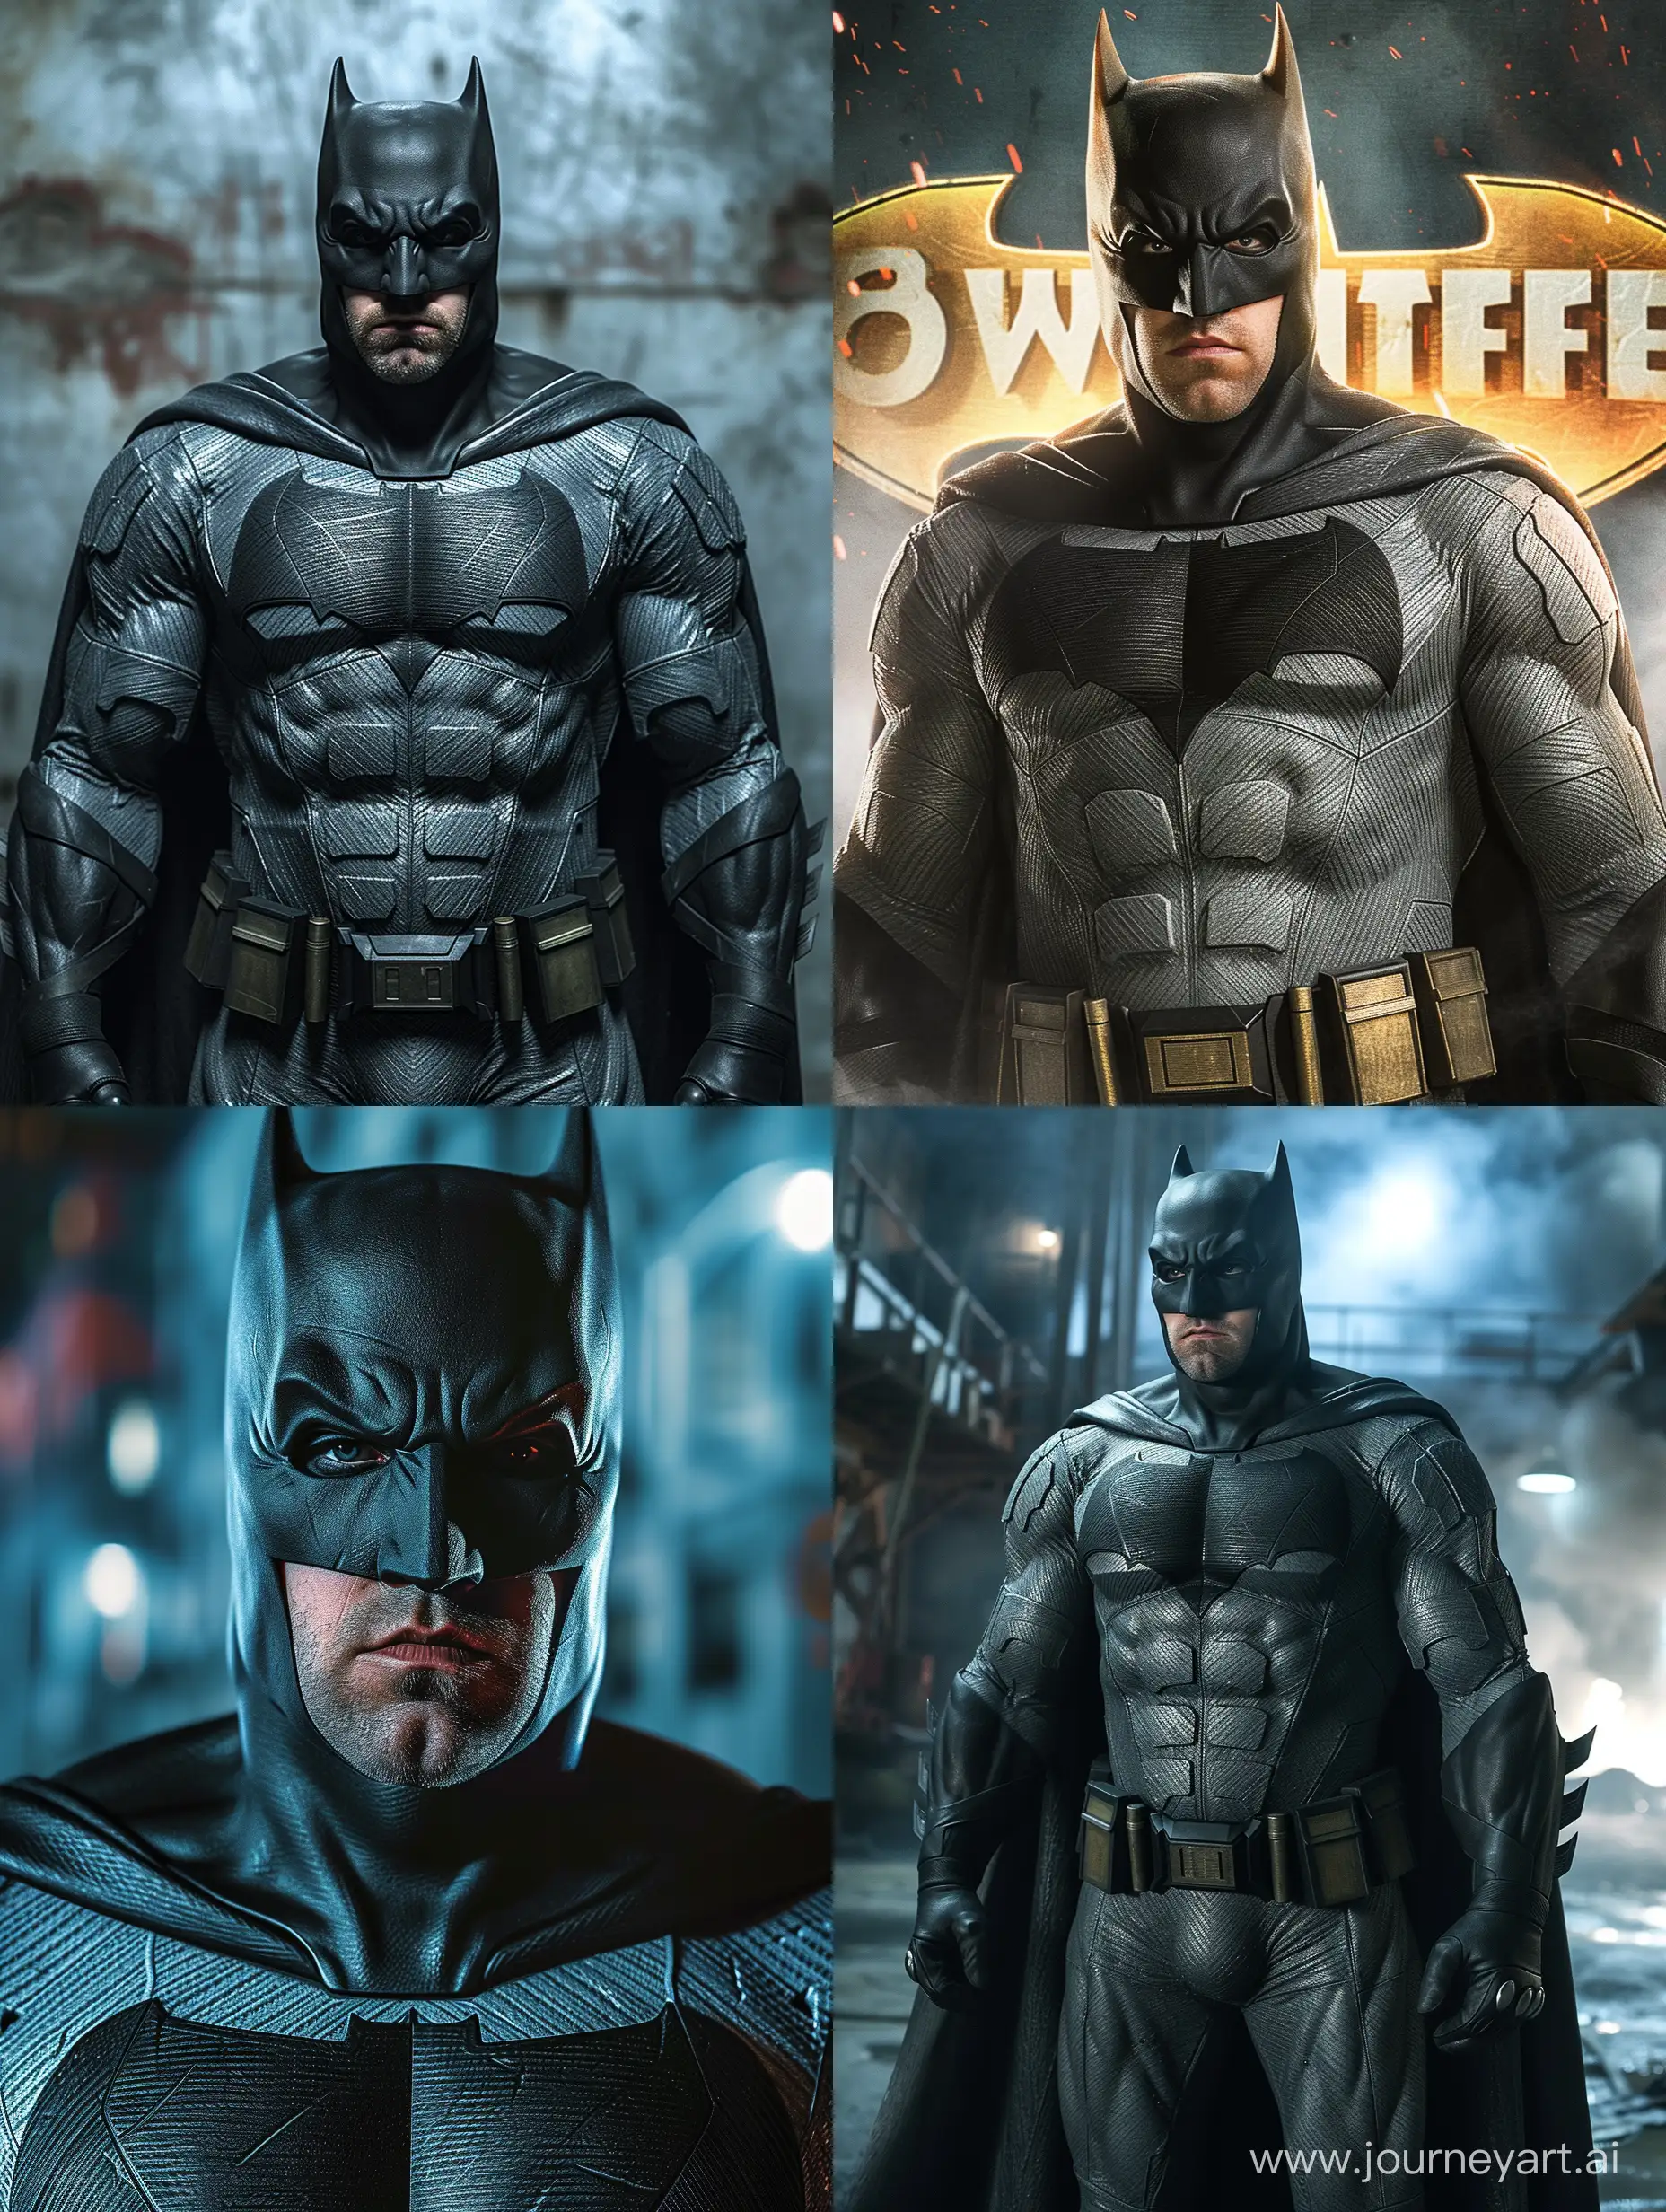 Batfleck as Batman in Whife 8K 